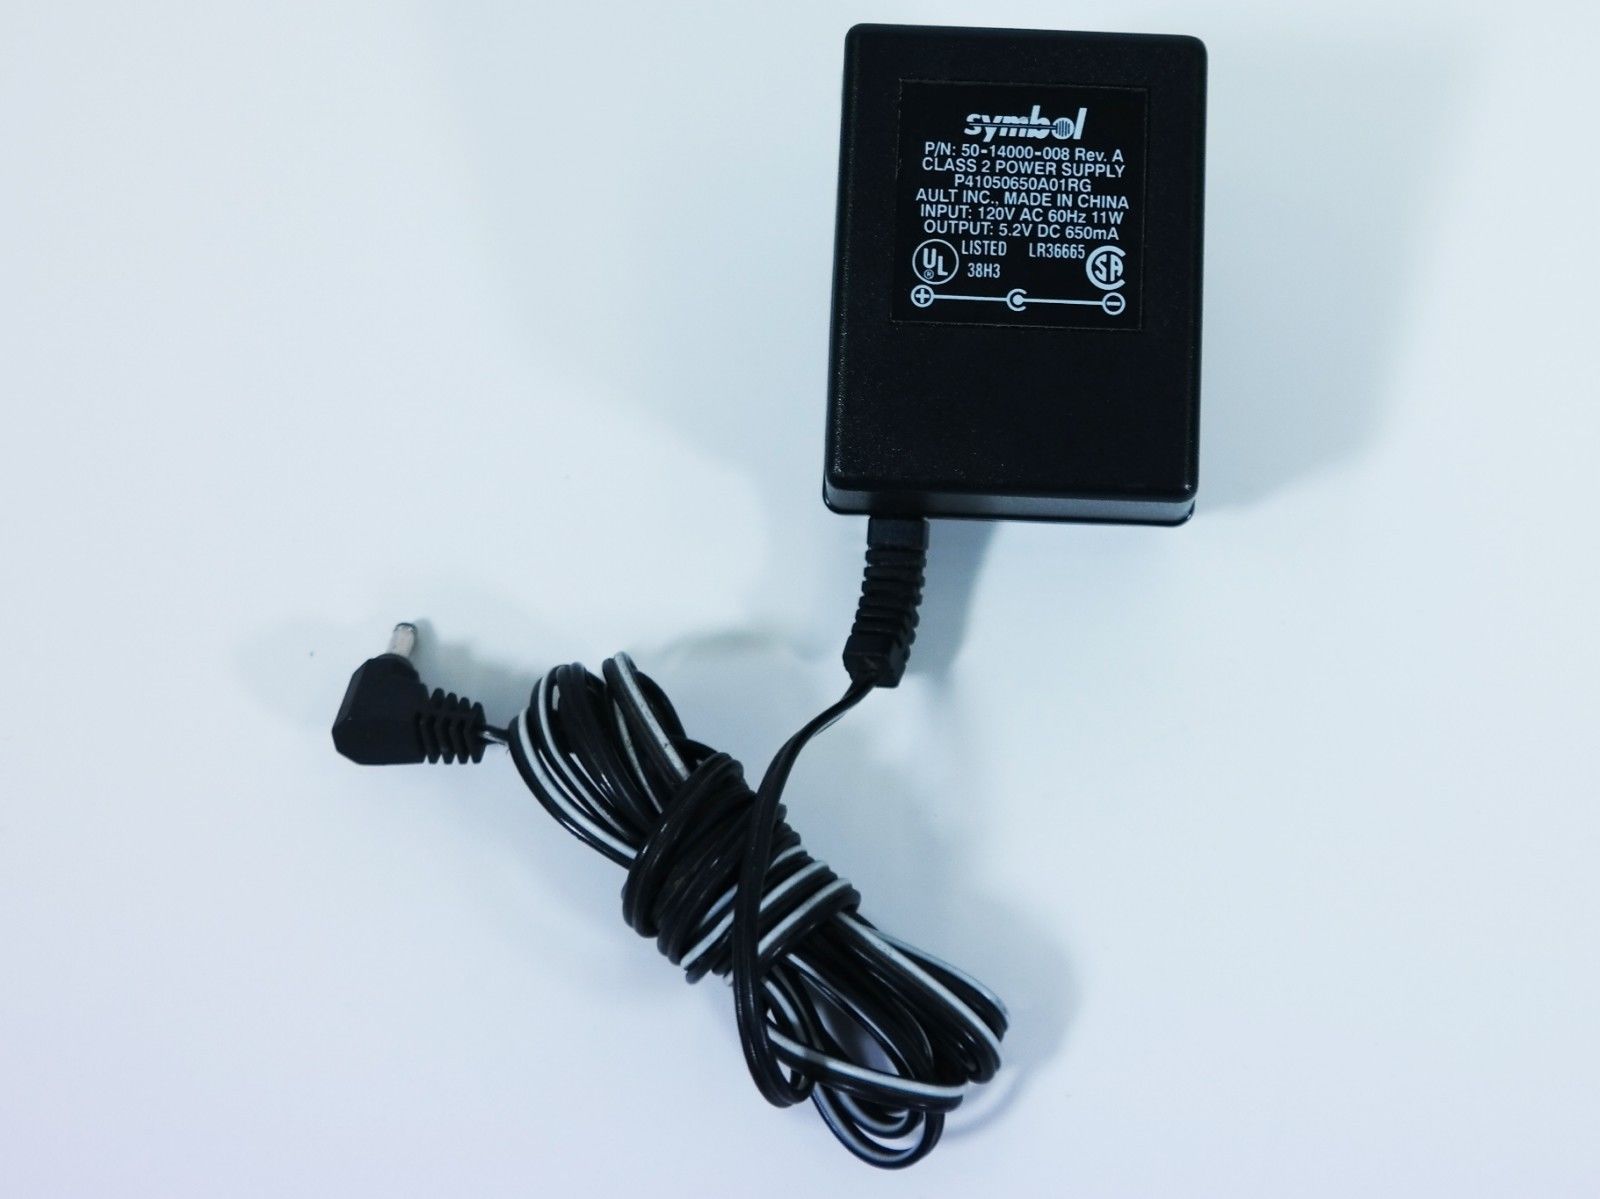 NEW 5.2V 650mA Symbol P41050650A01RG 50-14000-008 AC Adapter